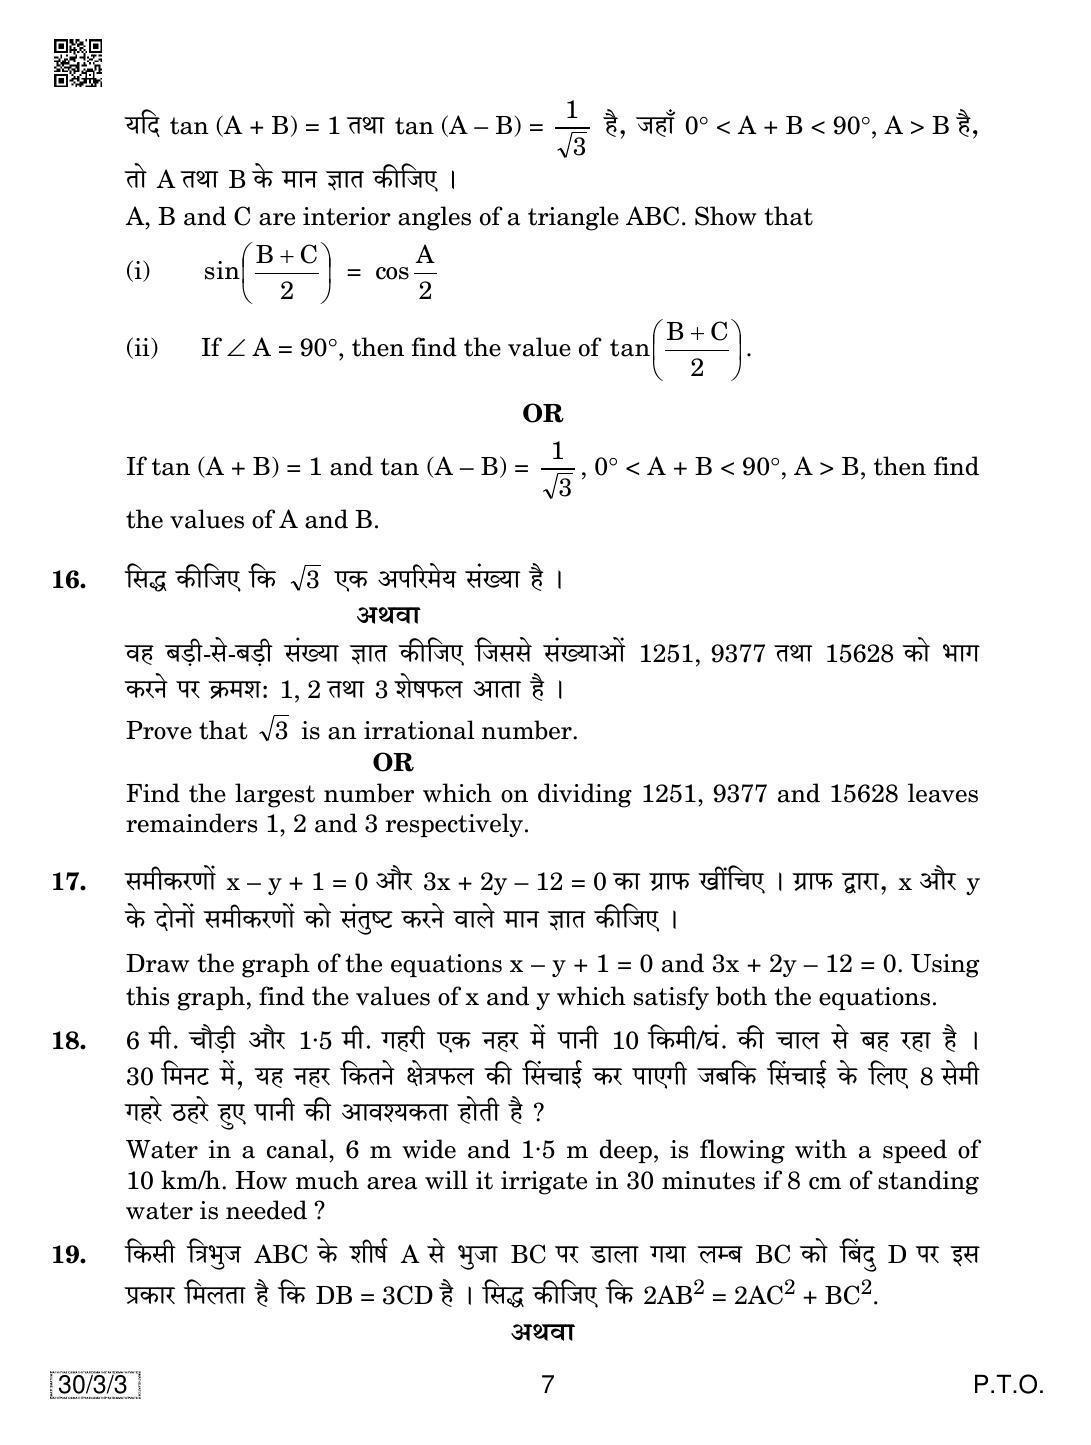 CBSE Class 10 Maths (30/3/3 - SET 3) 2019 Question Paper - Page 7